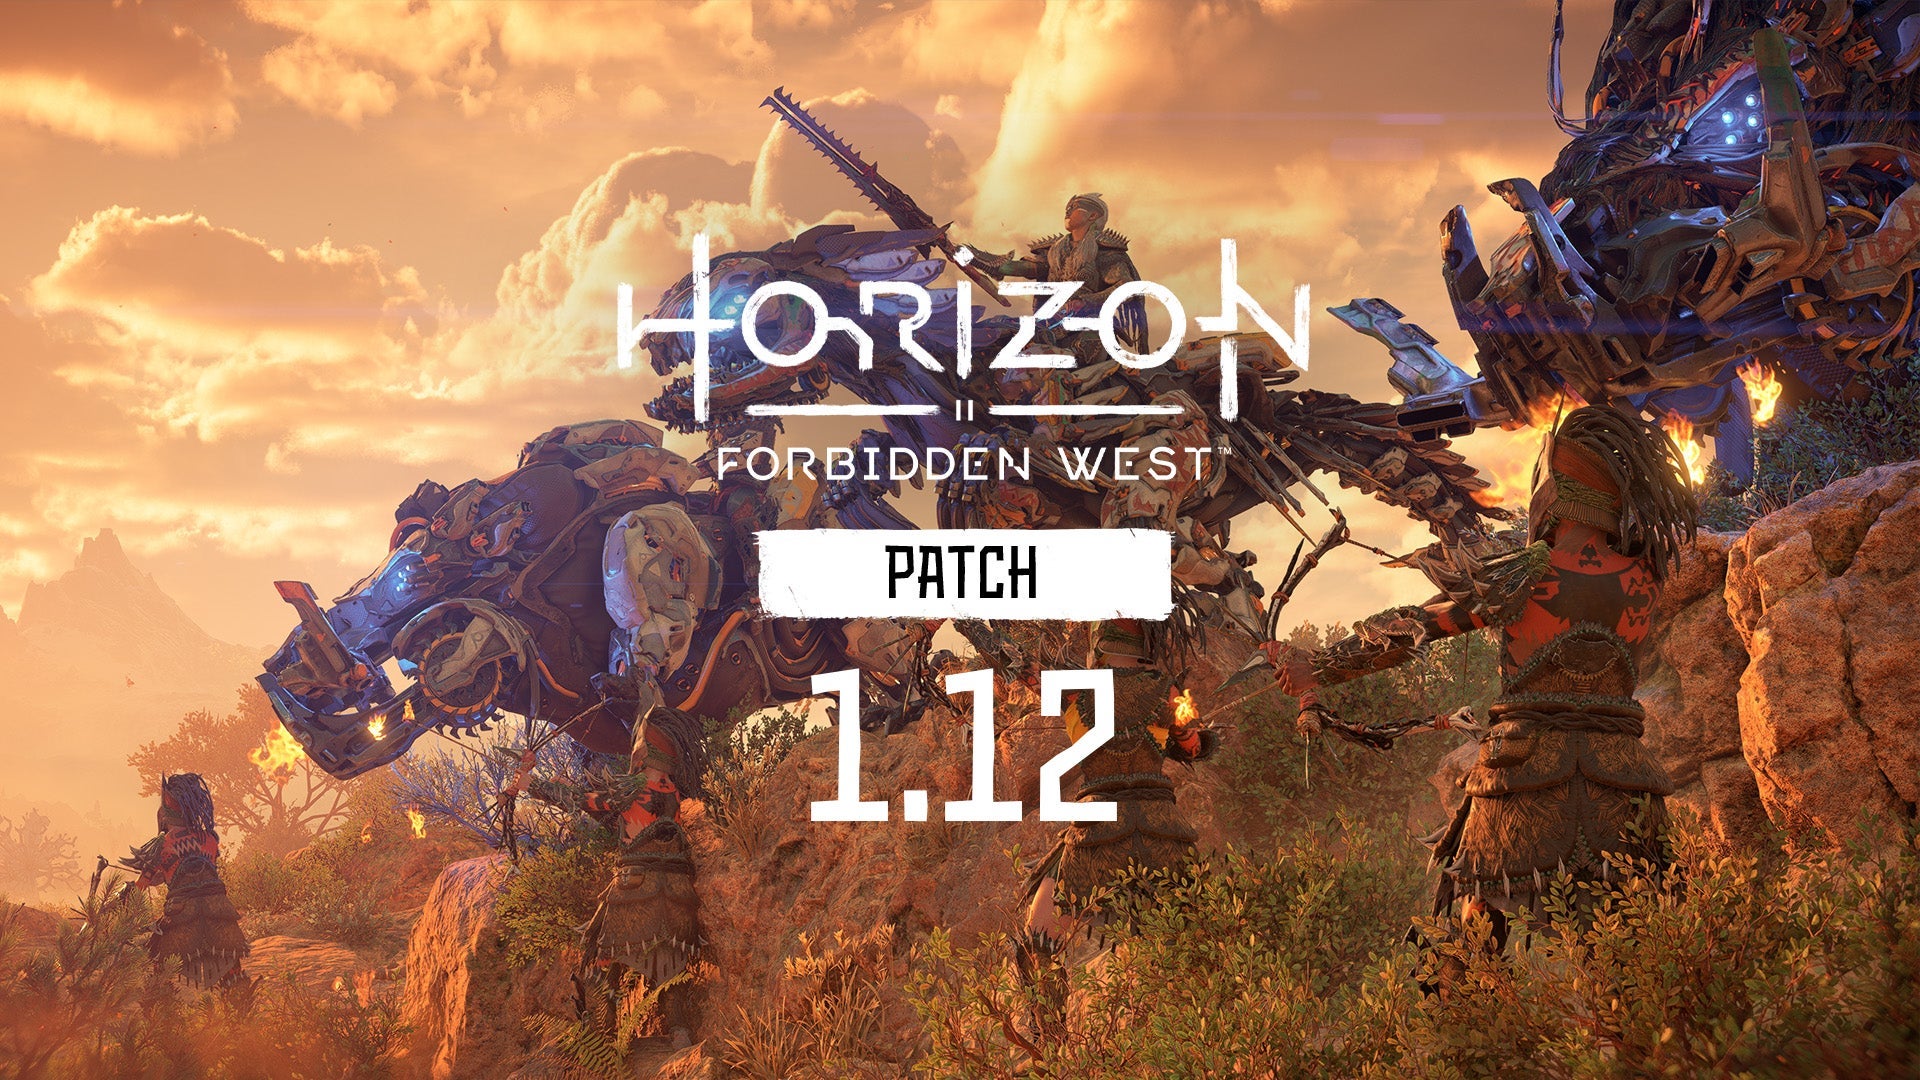 Imagem para Horizon Forbidden West recebeu Patch 1.12